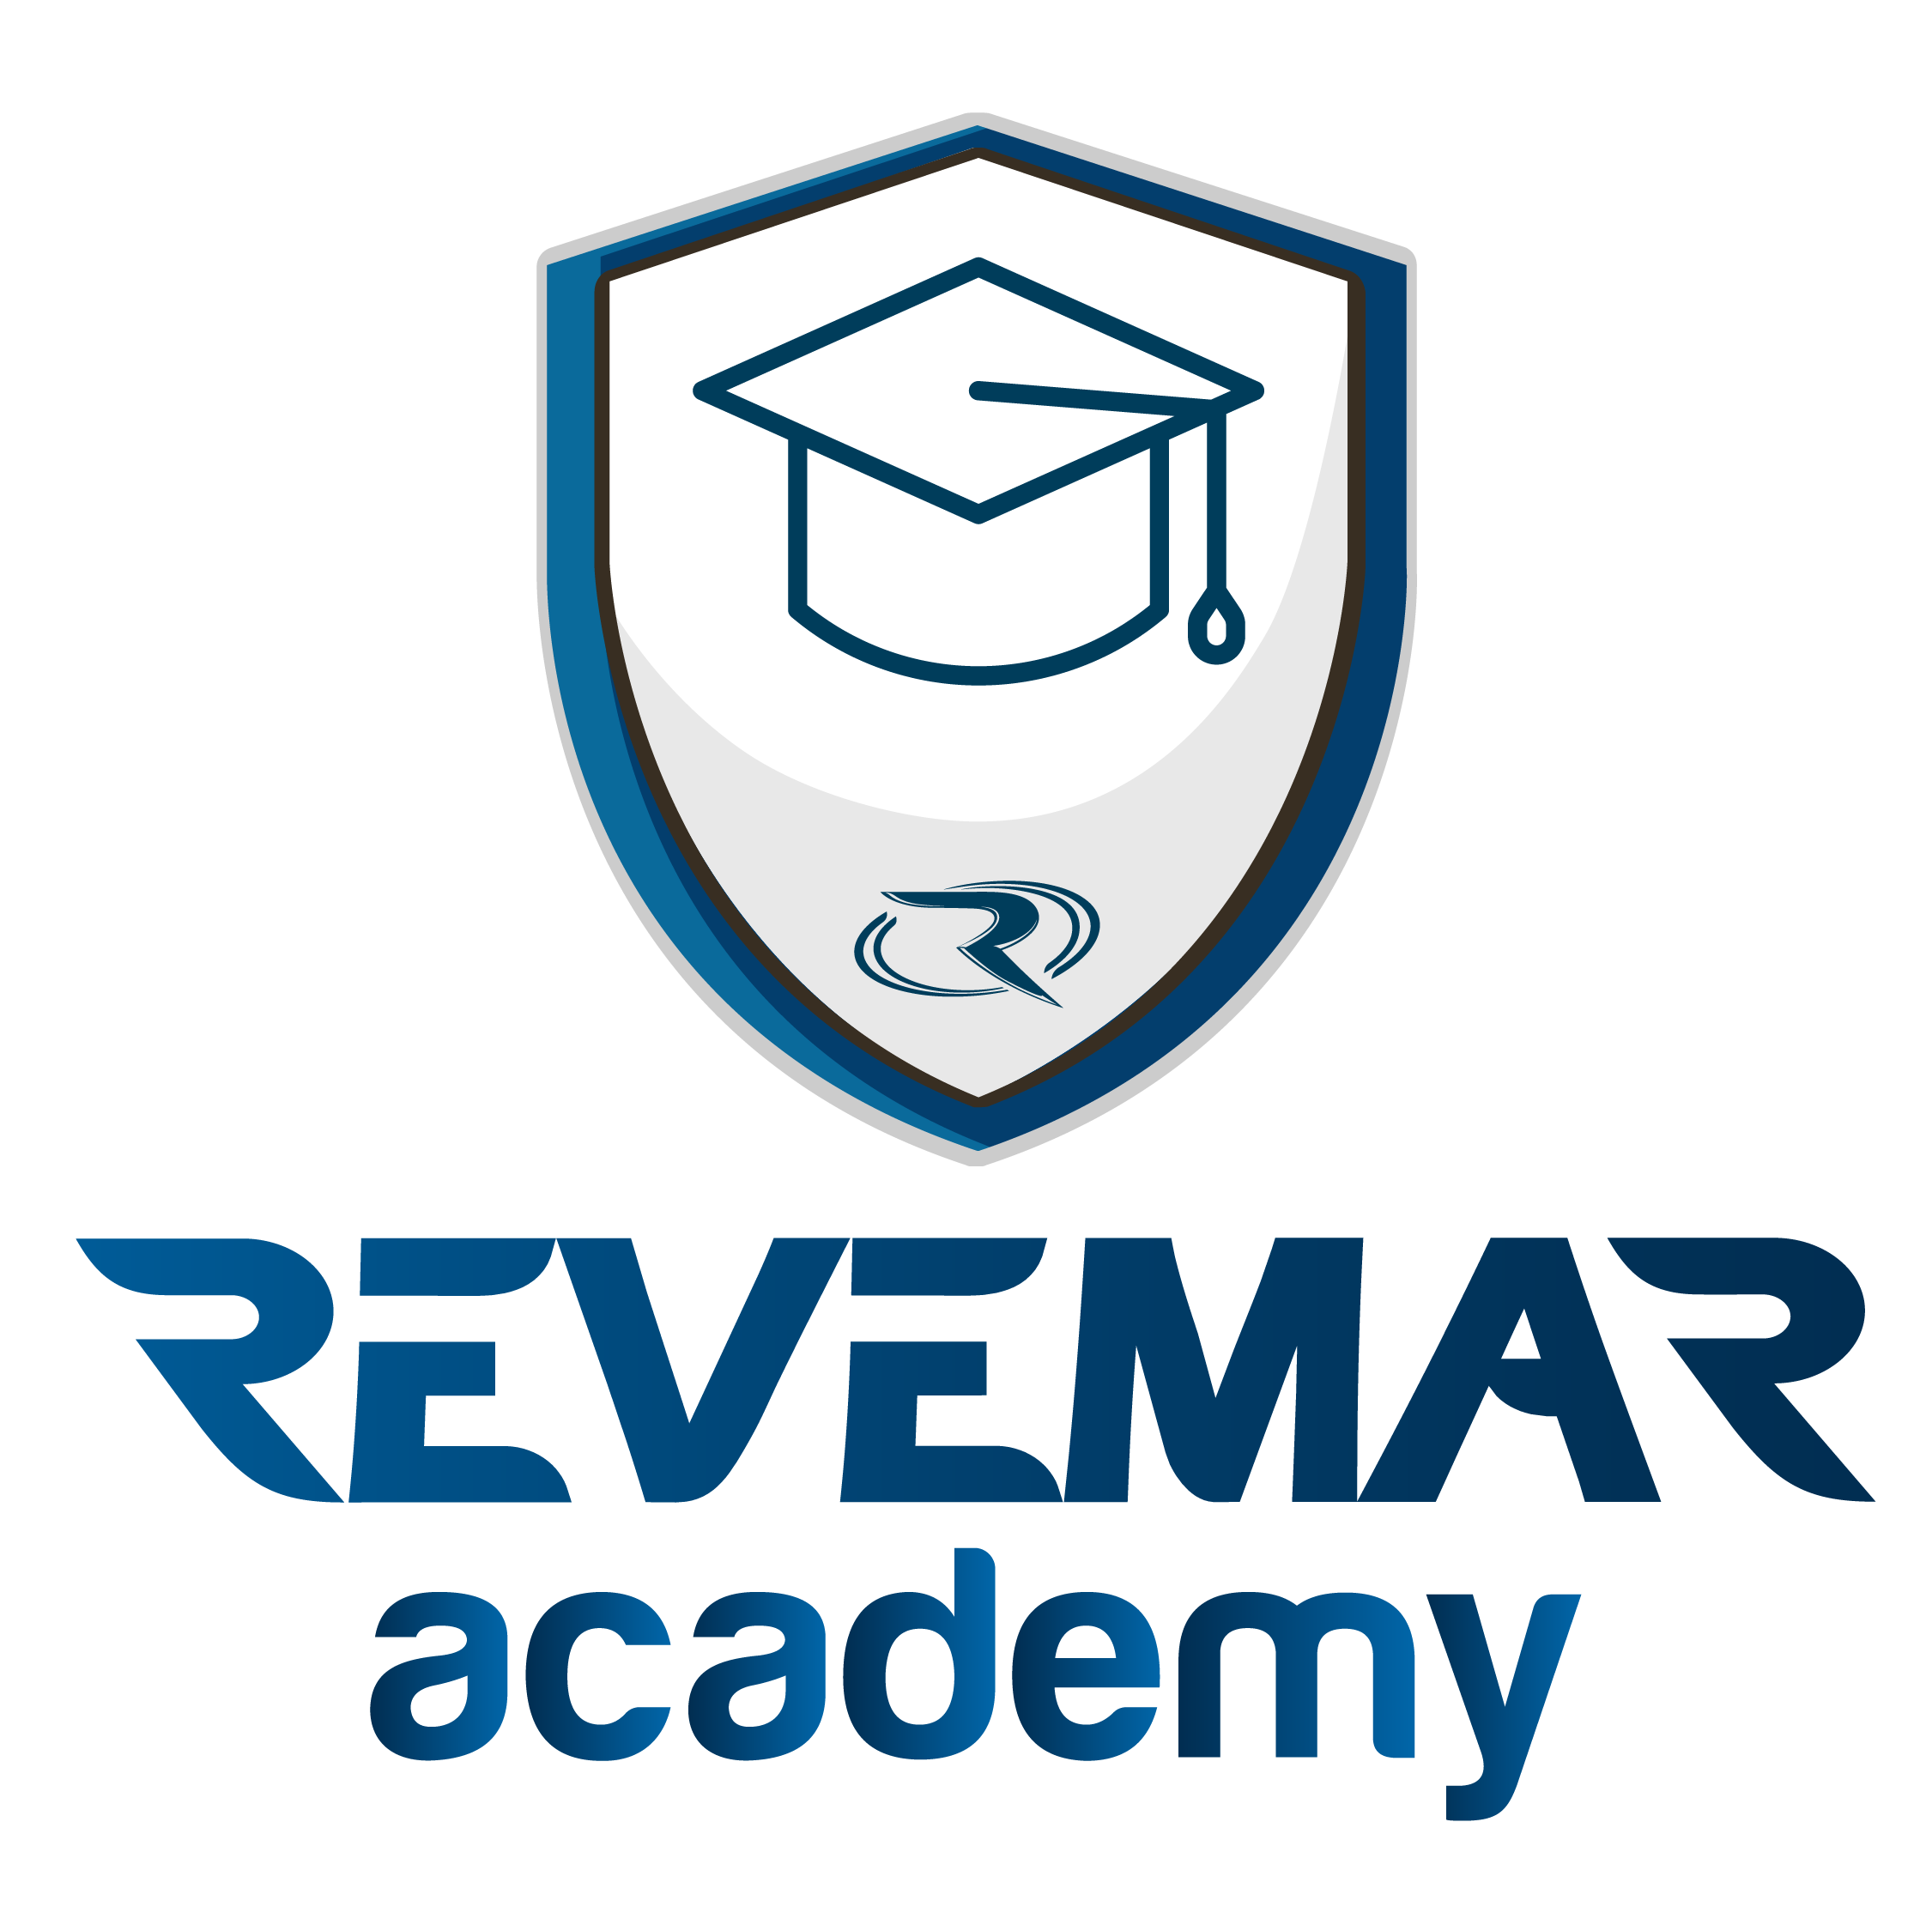 Revemar Academy